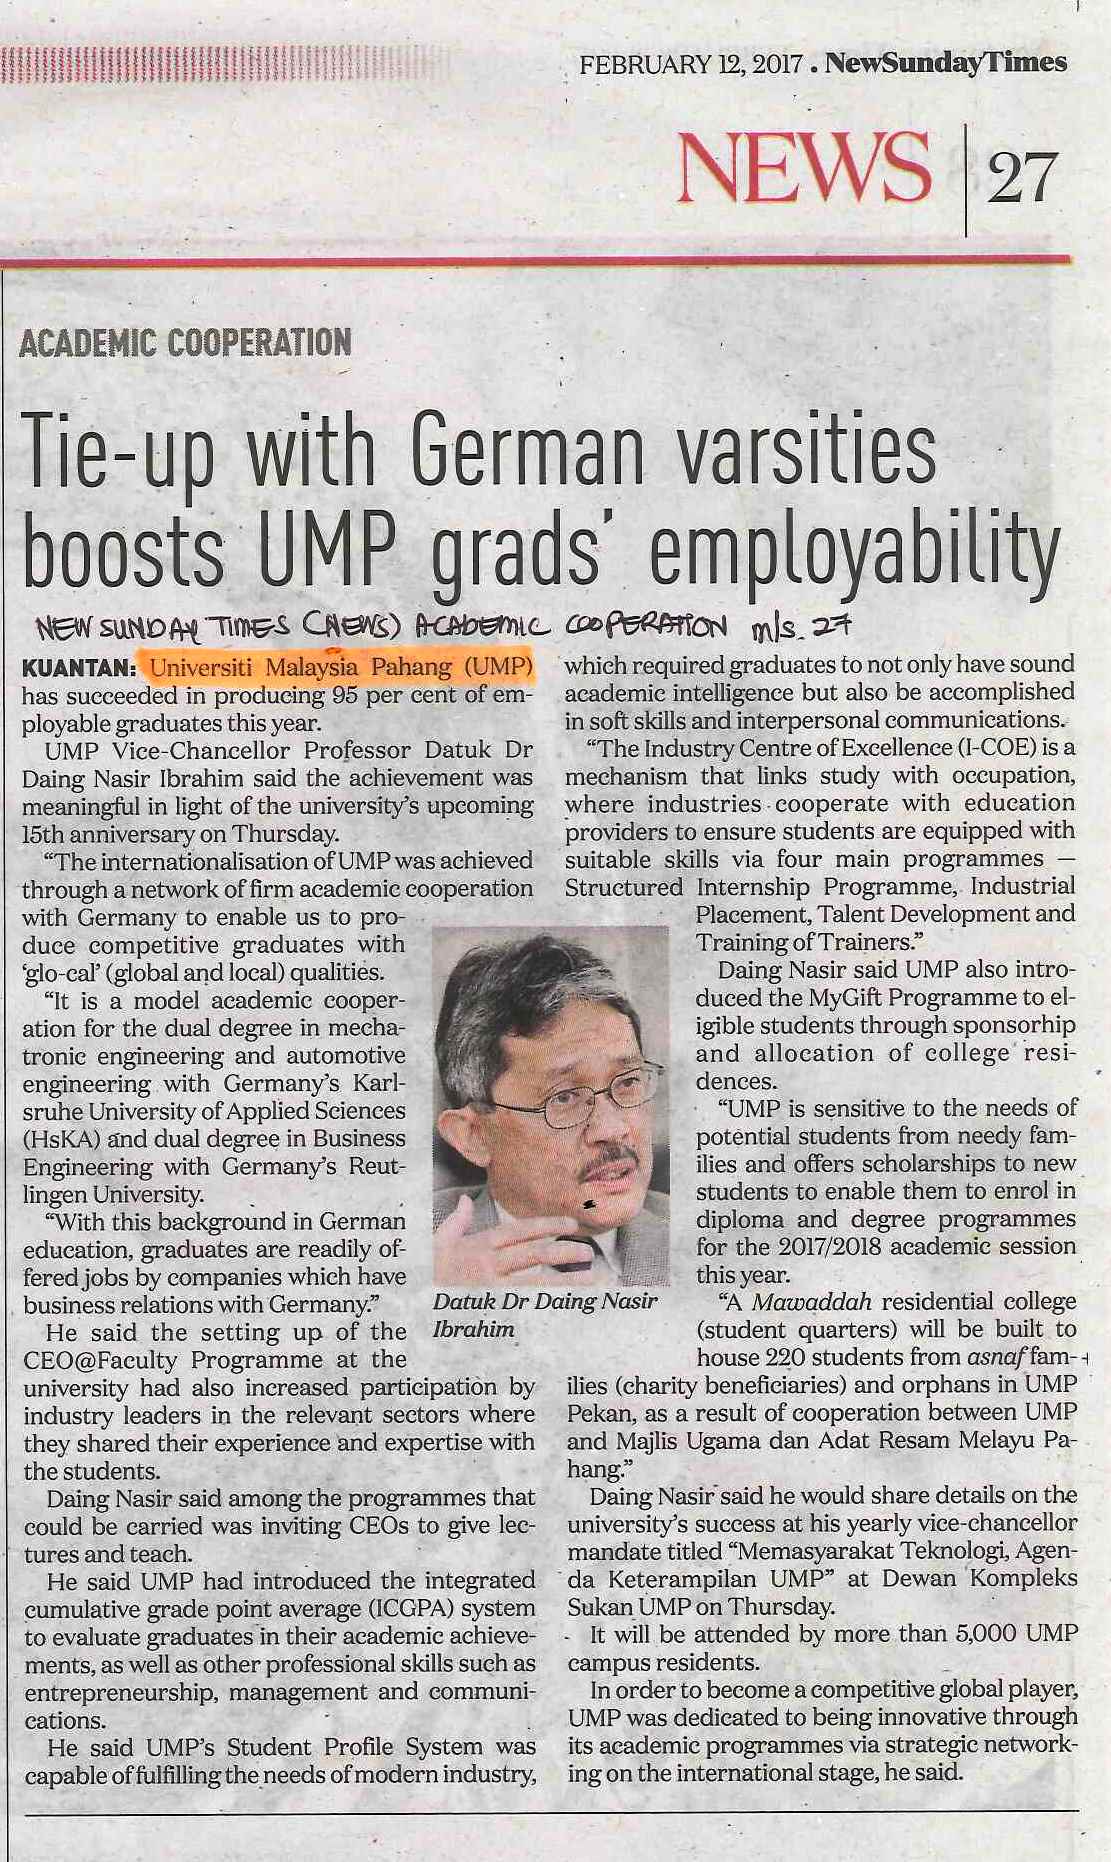 Tie-up with German varsities boots UMP Grad's employability